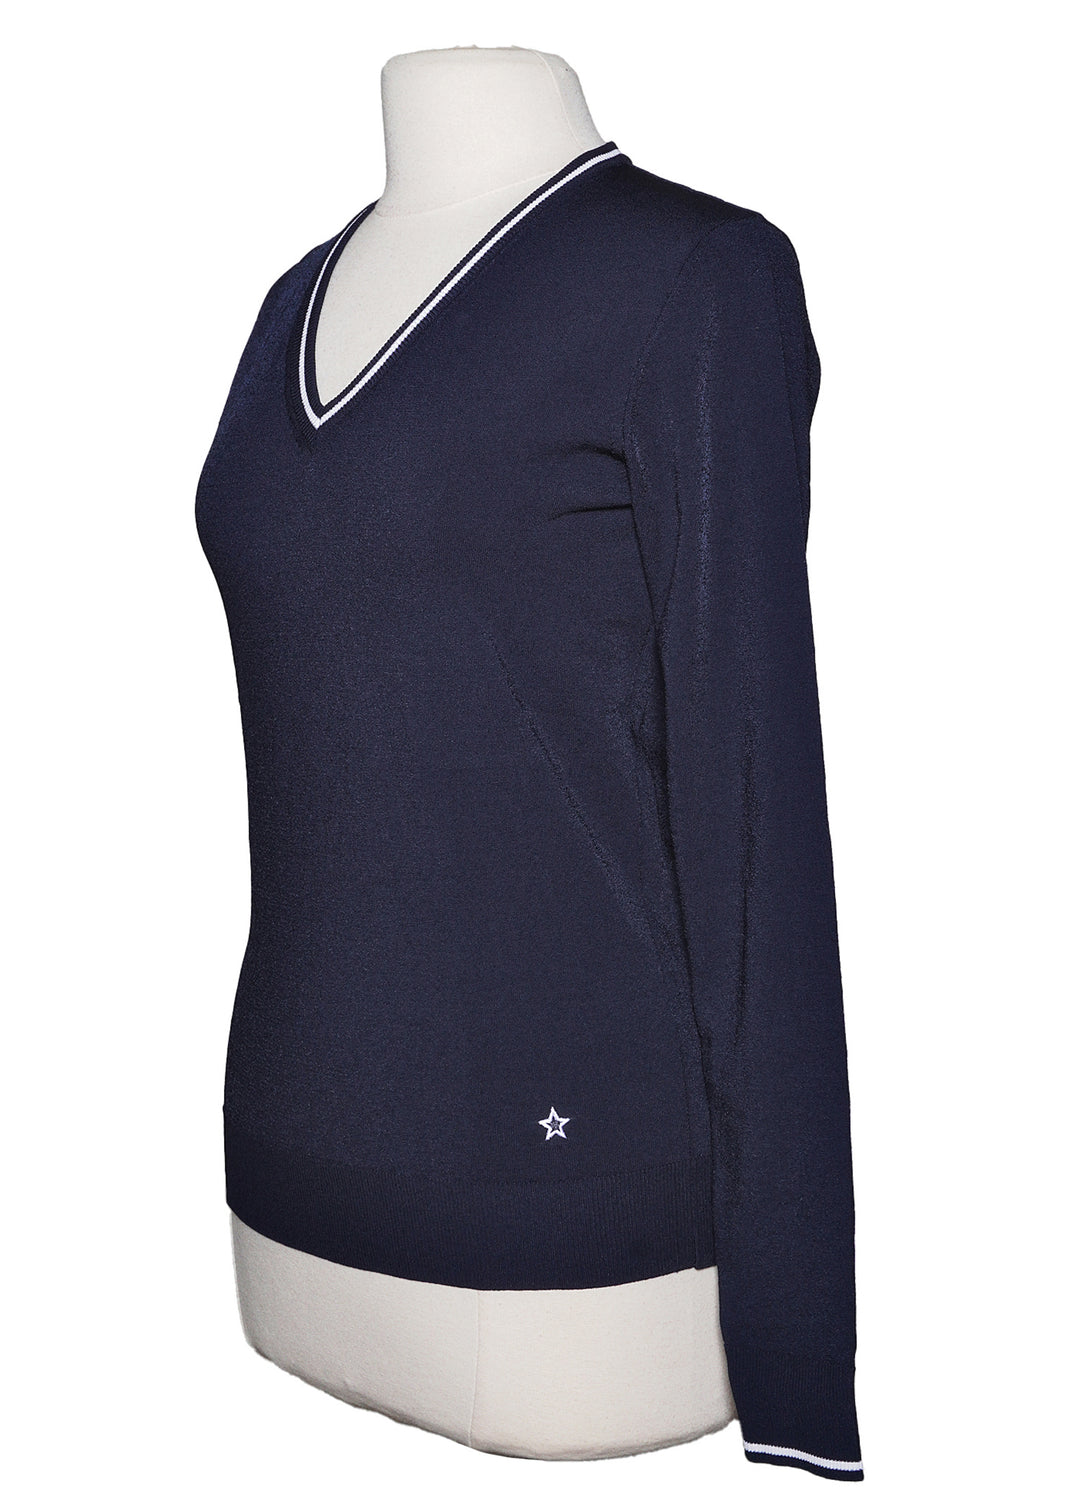 Lohla Sport Perfect V Neck Sweater - Navy - Size Small - Skorzie